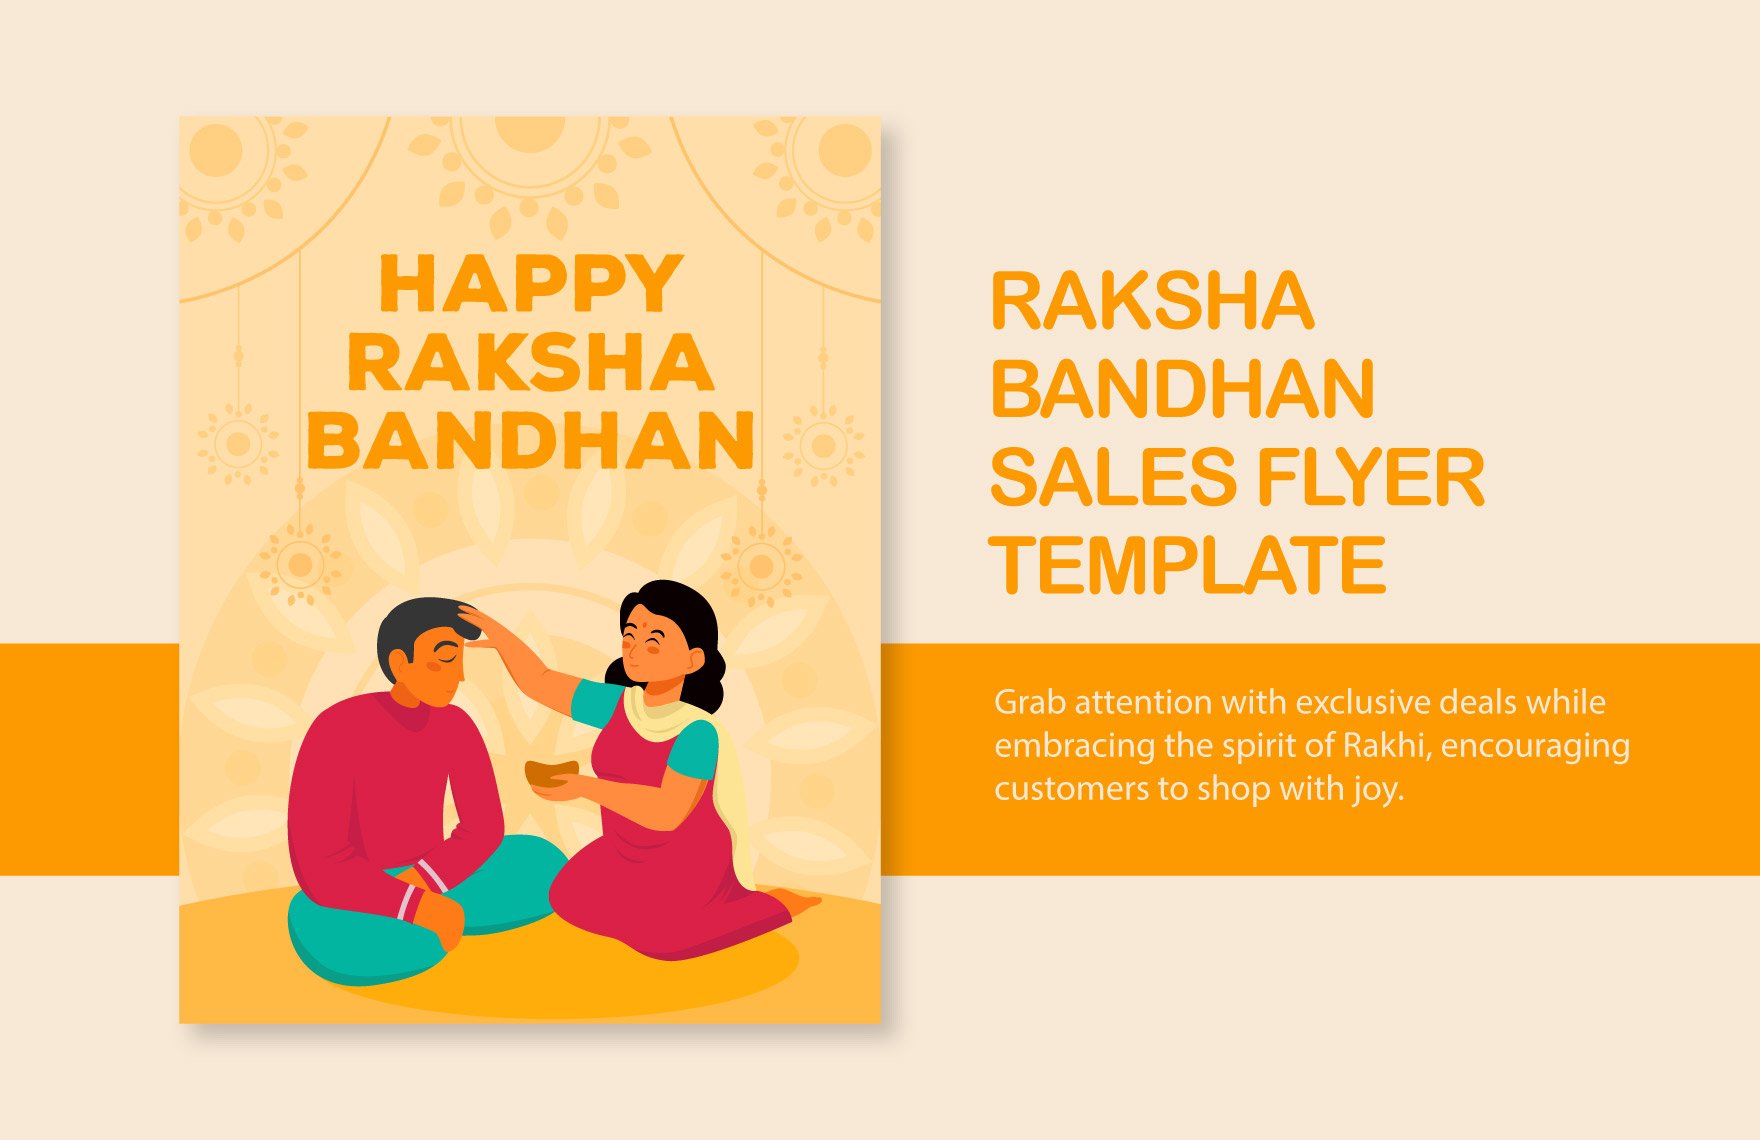 Free Raksha Bandhan Sales Flyer Template in Illustrator, PSD, PNG